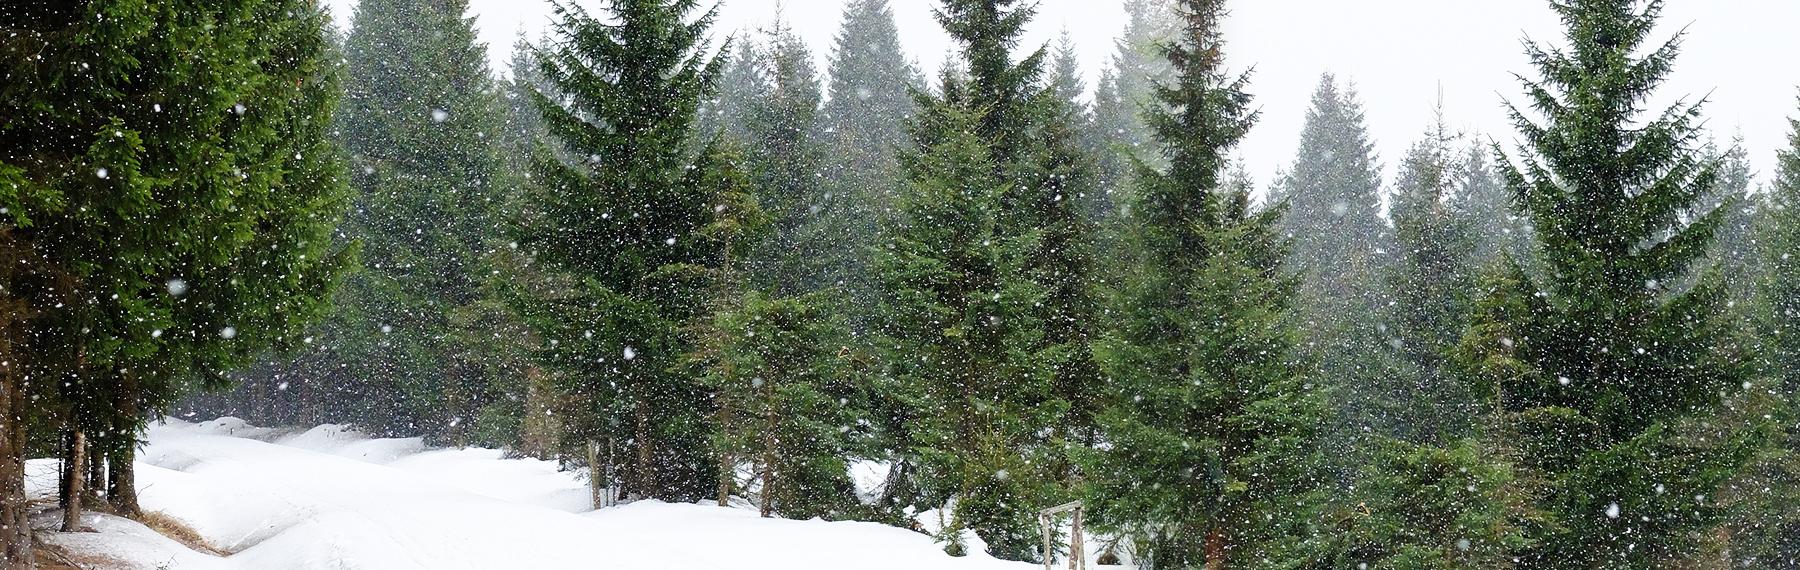 granskog i snö